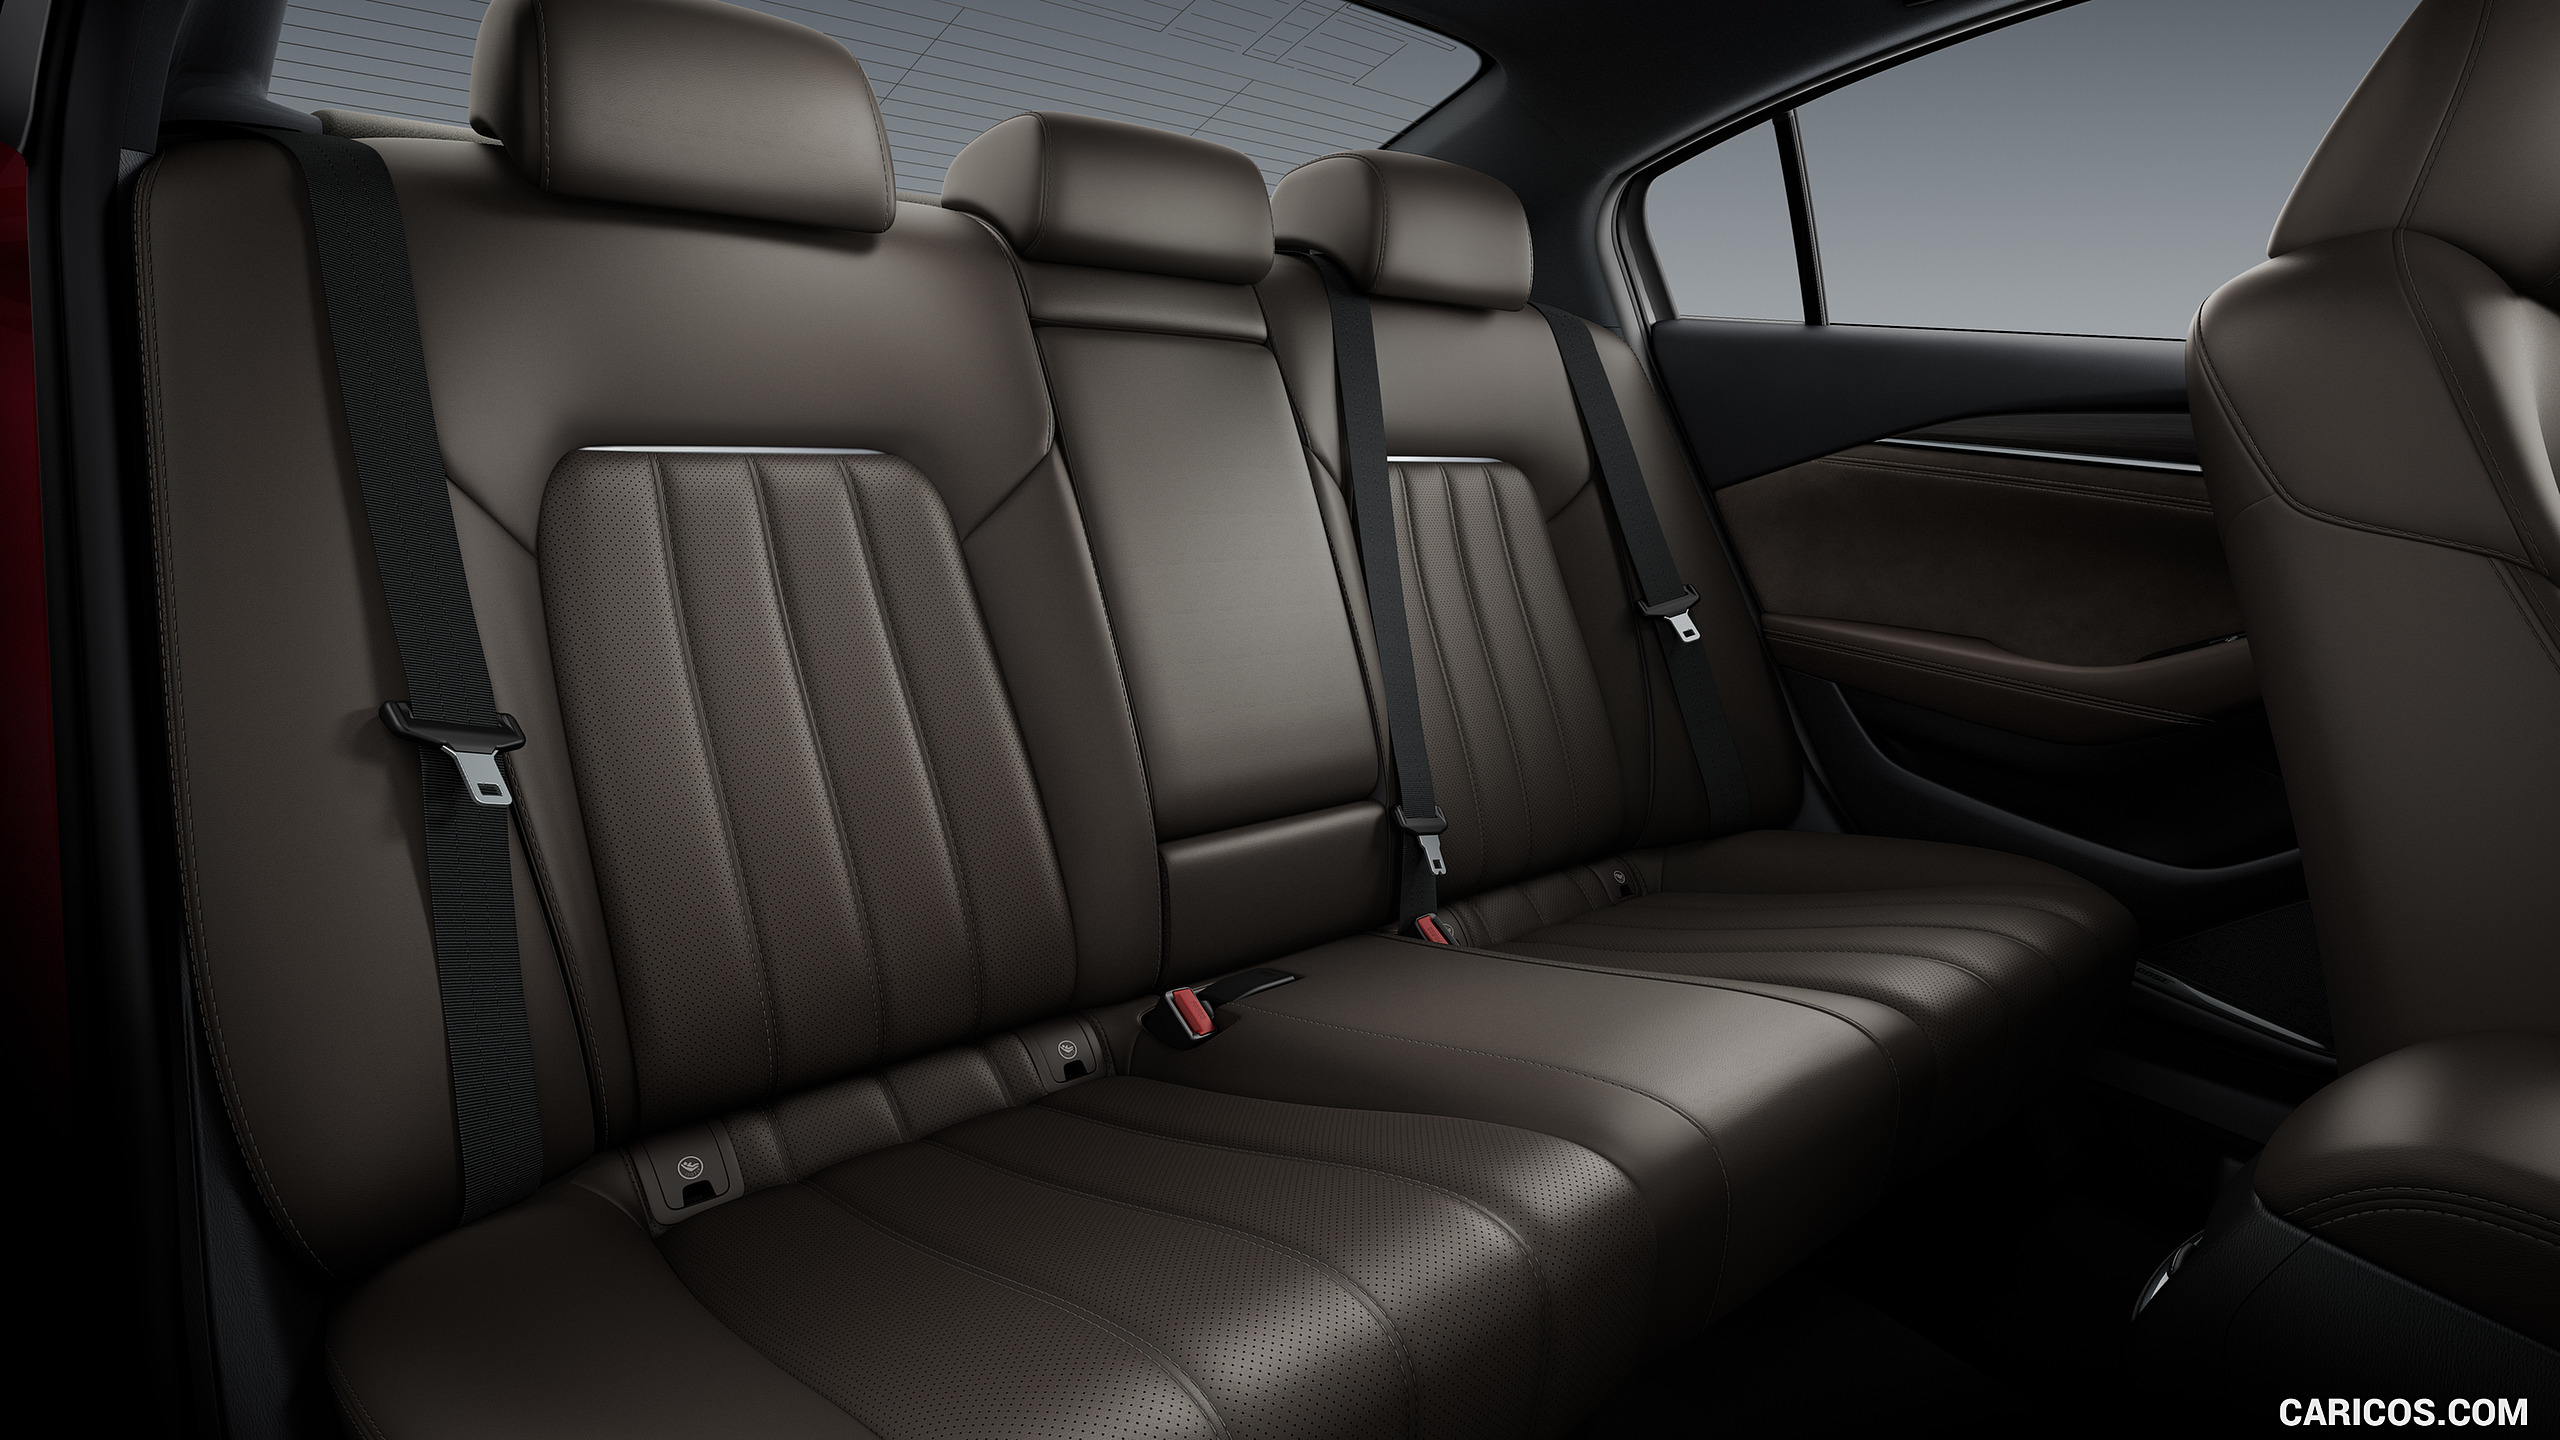 2018 Mazda6 - Interior, Rear Seats, #19 of 235